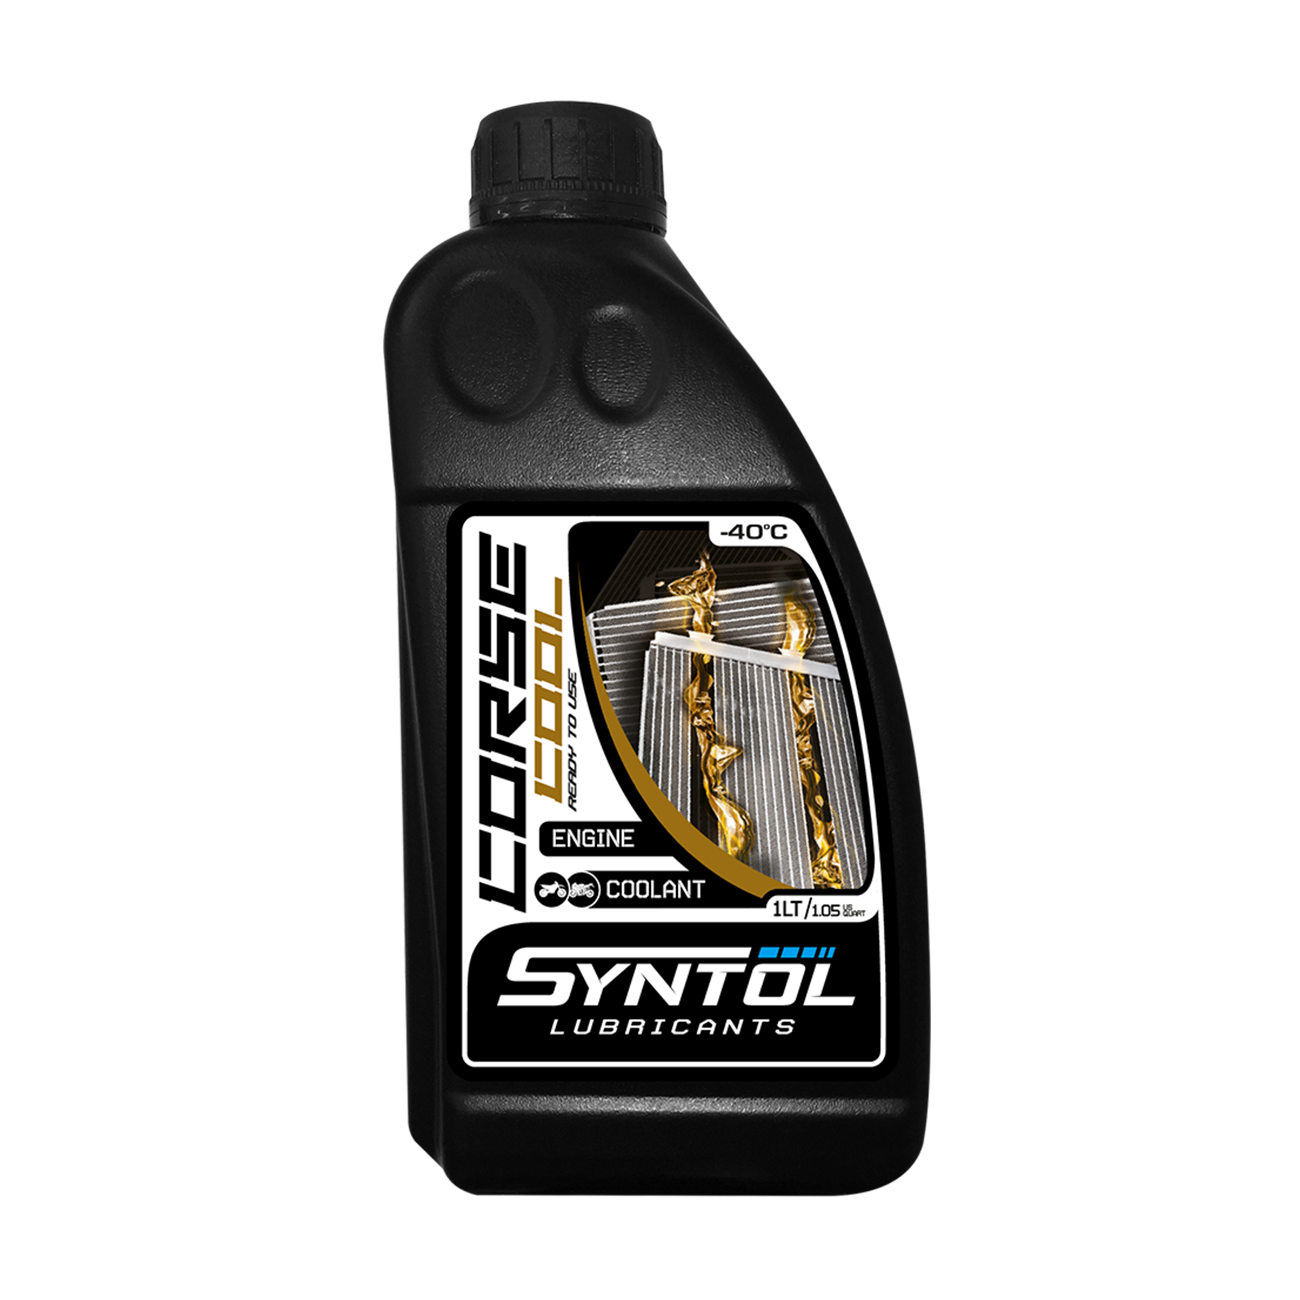 SYNTOL CORSE COOL RTU 1 Litre Bottle - Industrial Lubricant